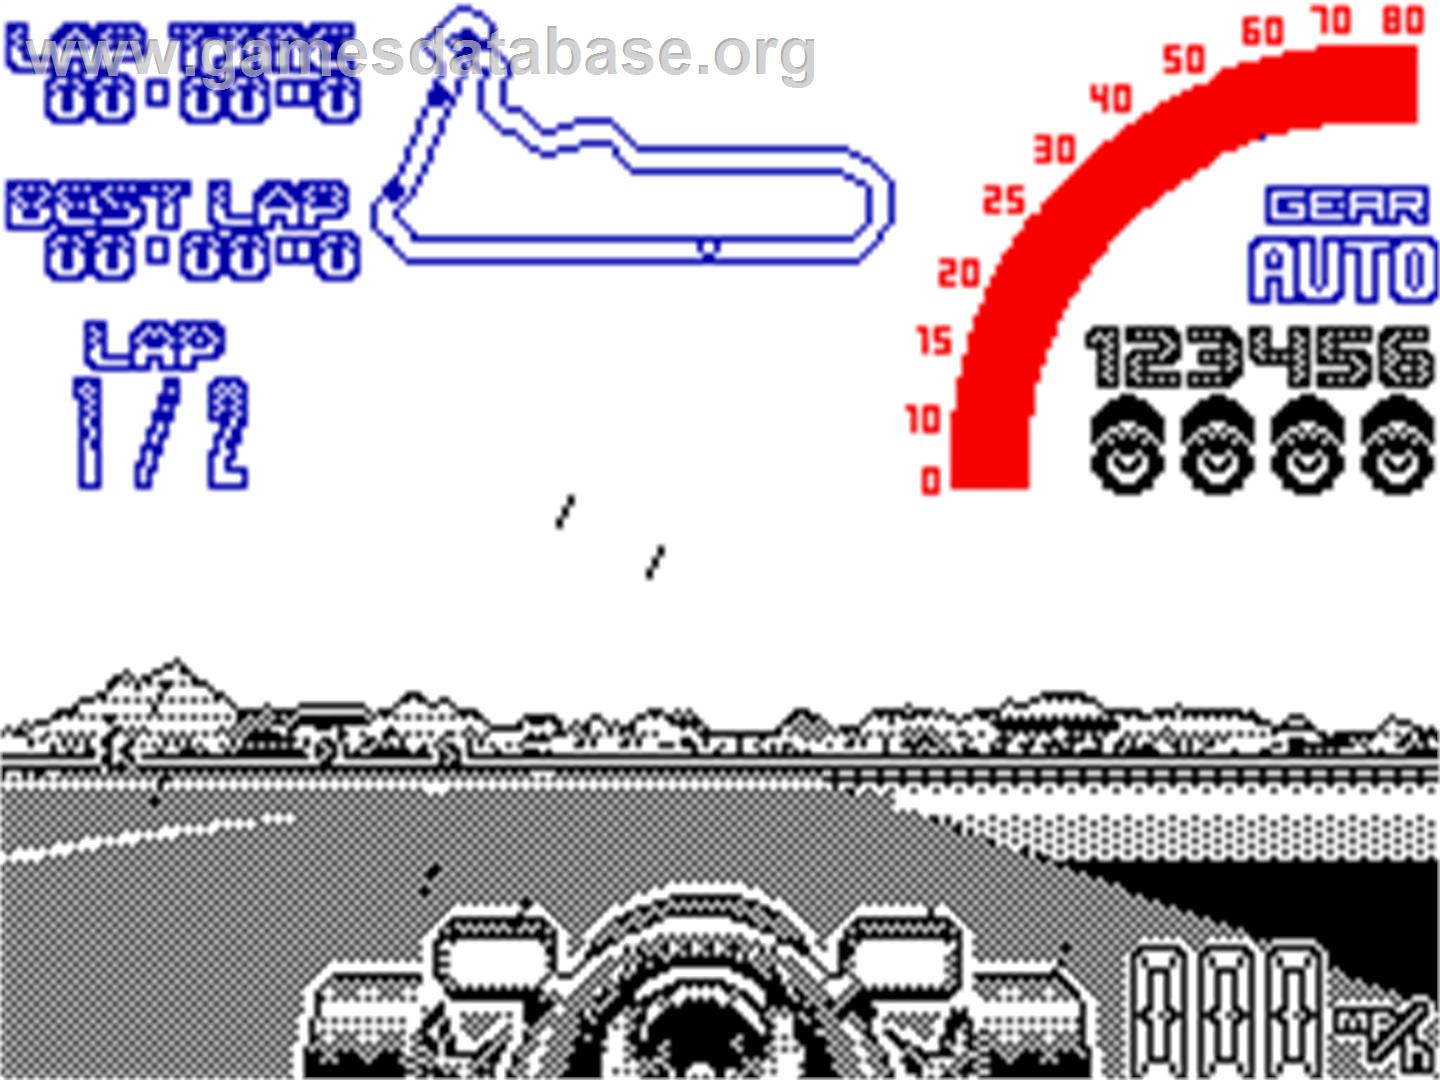 Nigel Mansell's World Championship - Sinclair ZX Spectrum - Artwork - In Game